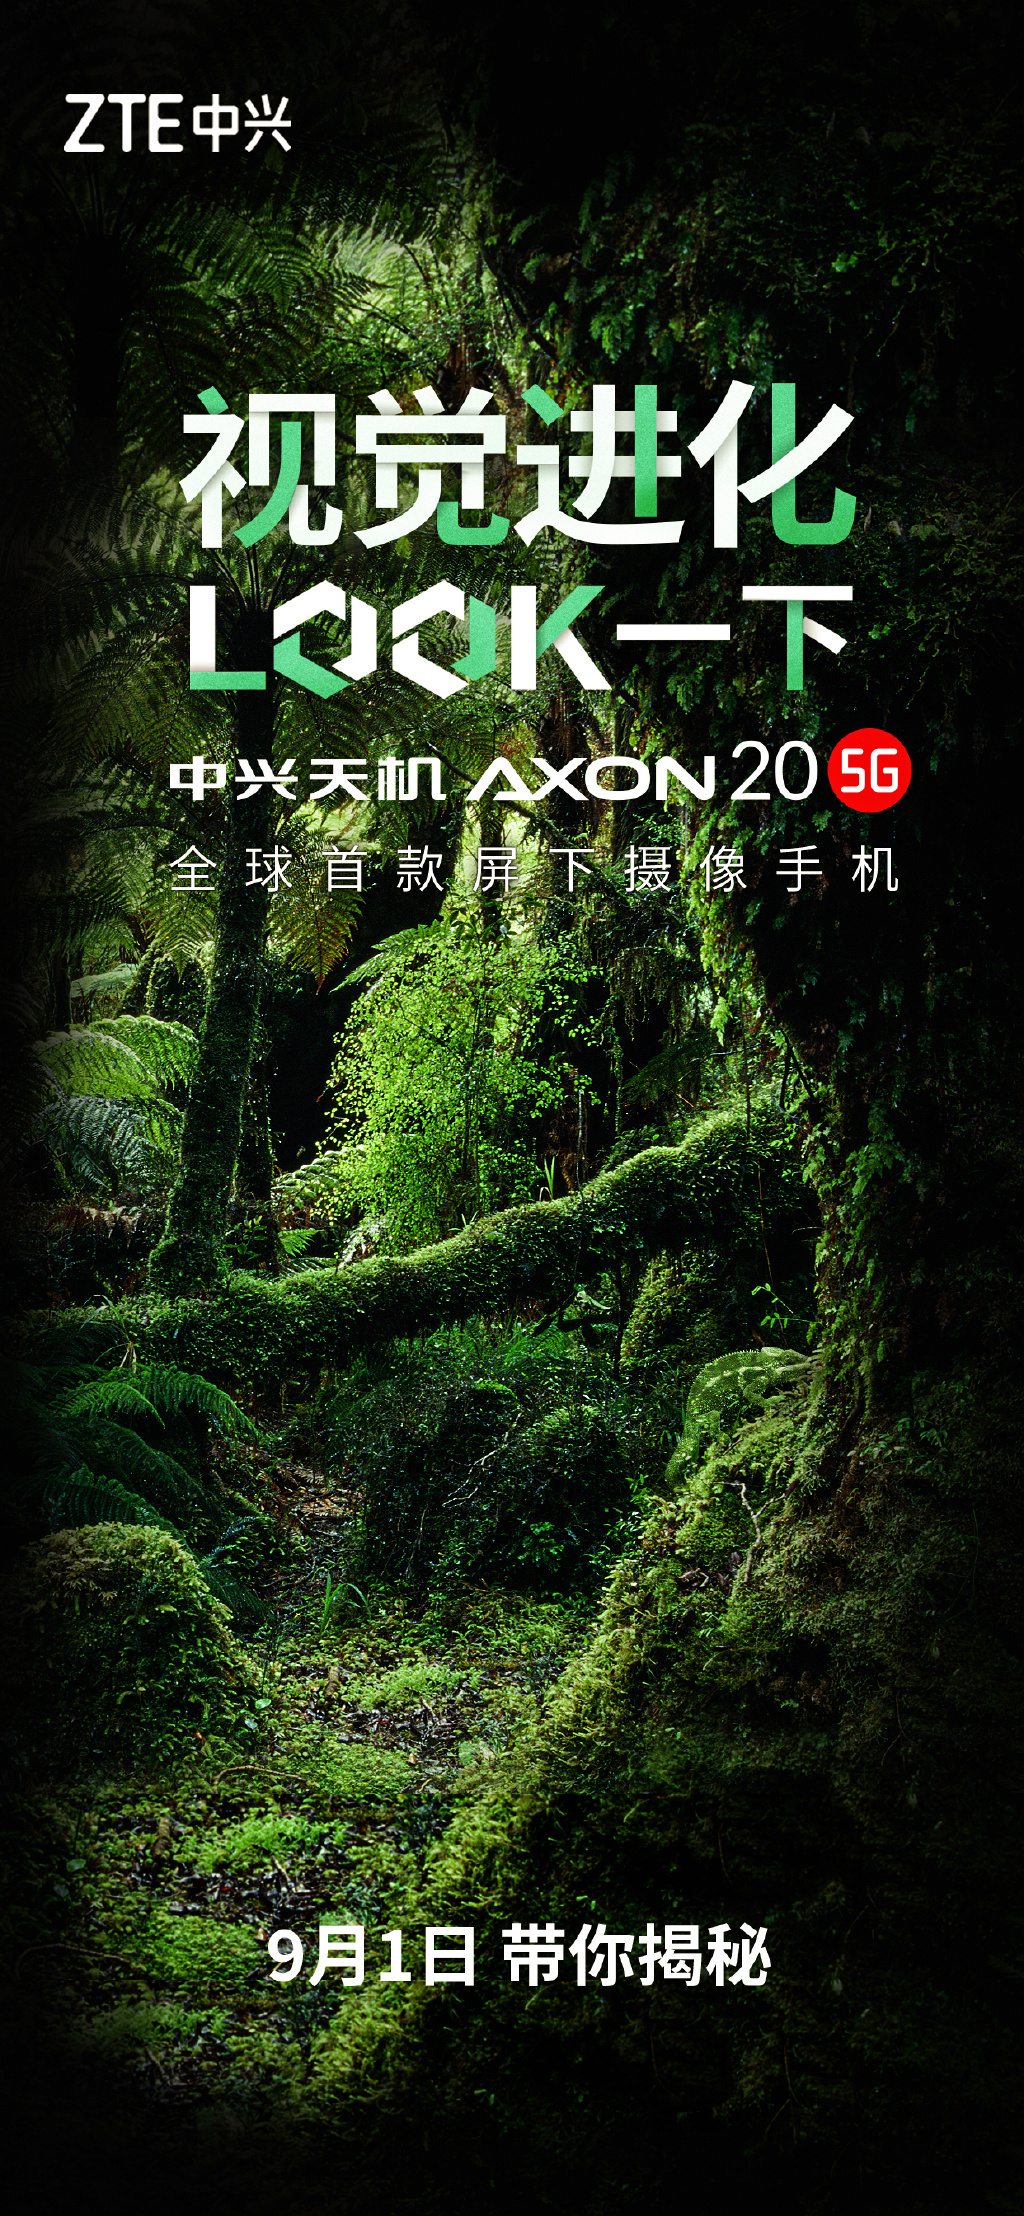 zte中兴屏下摄像头手机上AXON 20正面照发布，新产品九月一日公布